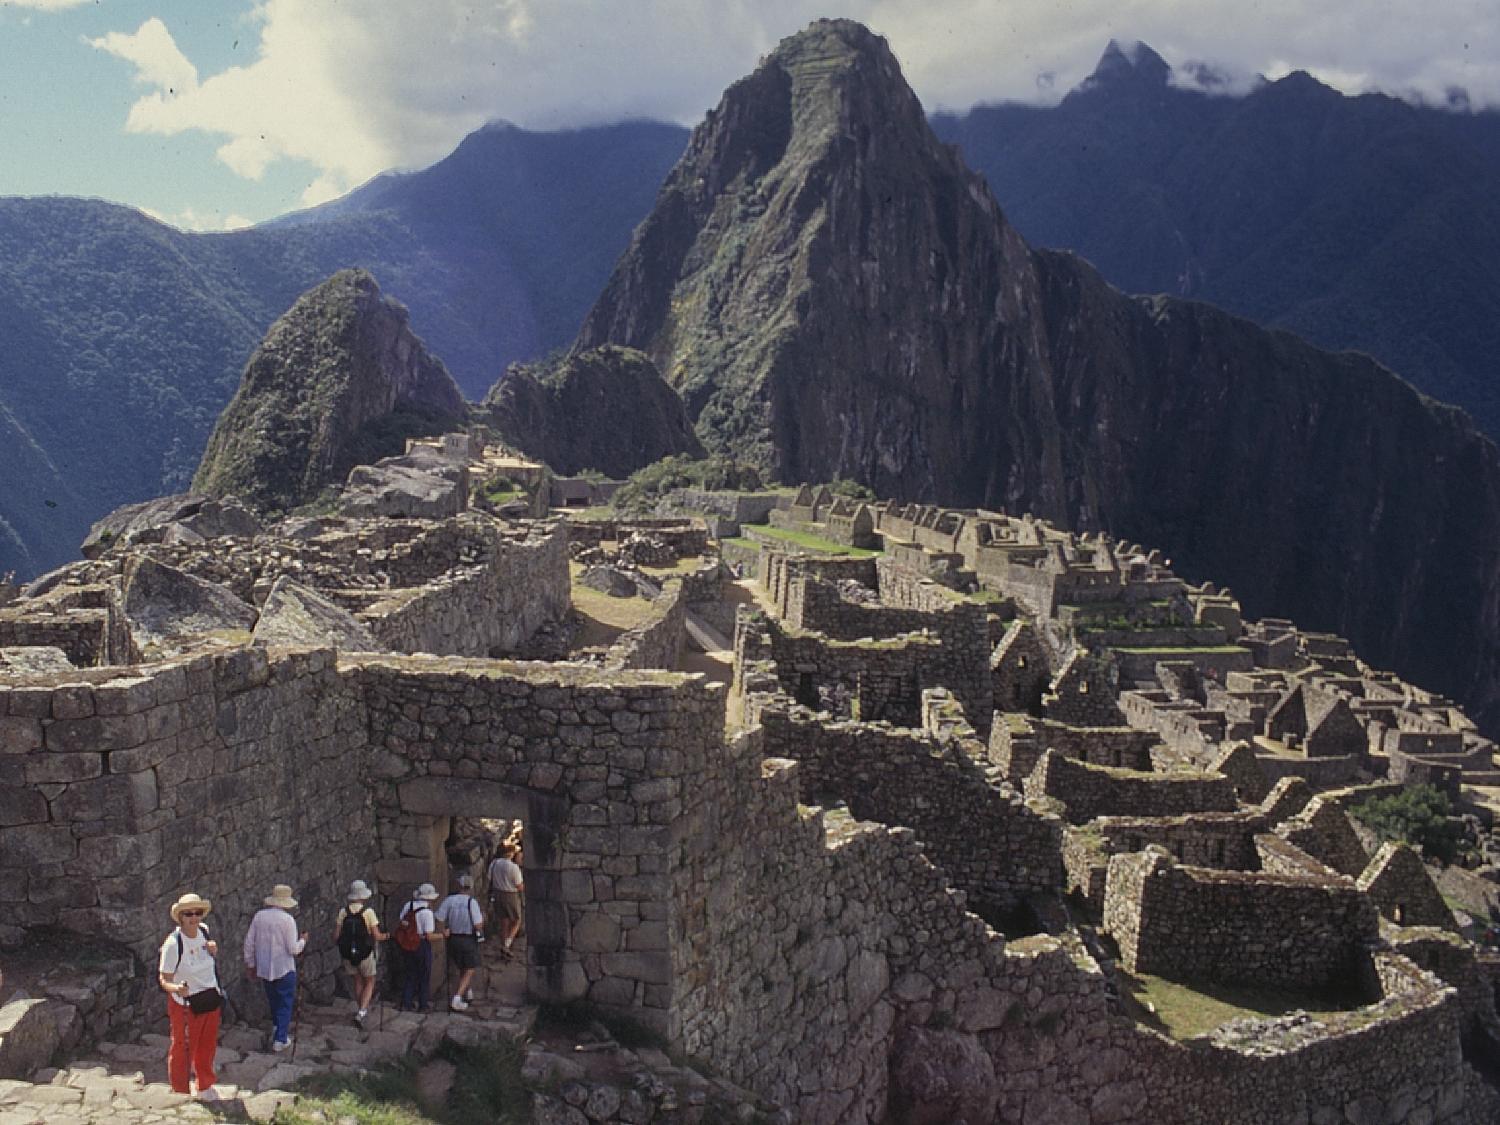 Peru Wallpaper Machu Picchu 2K wallpapers and backgrounds photos